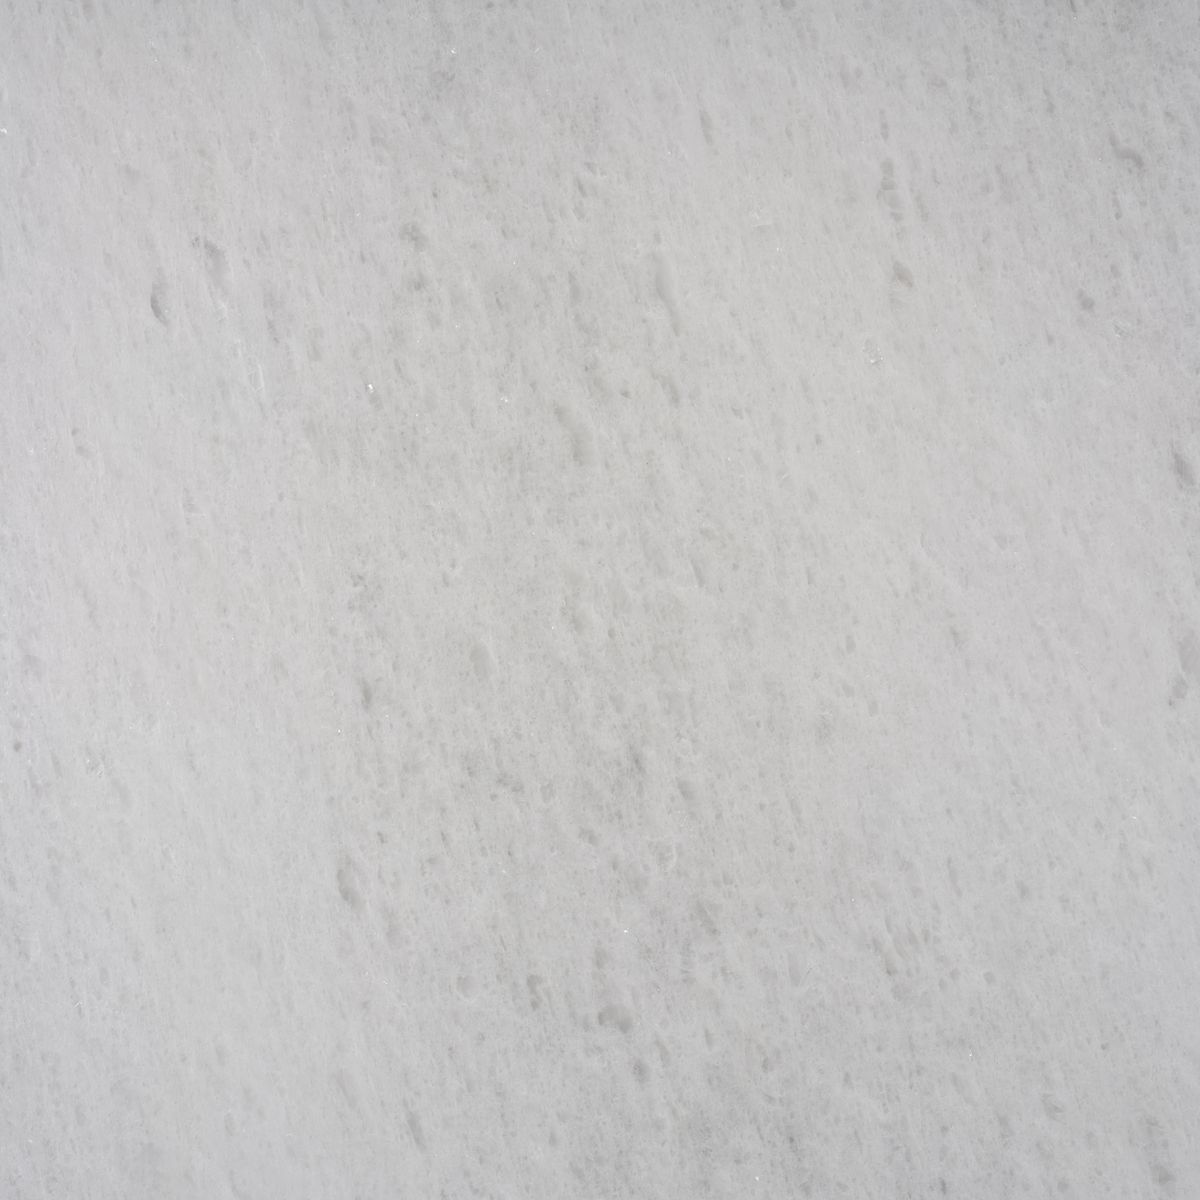 bianco neve - bianco v - snow white marbres